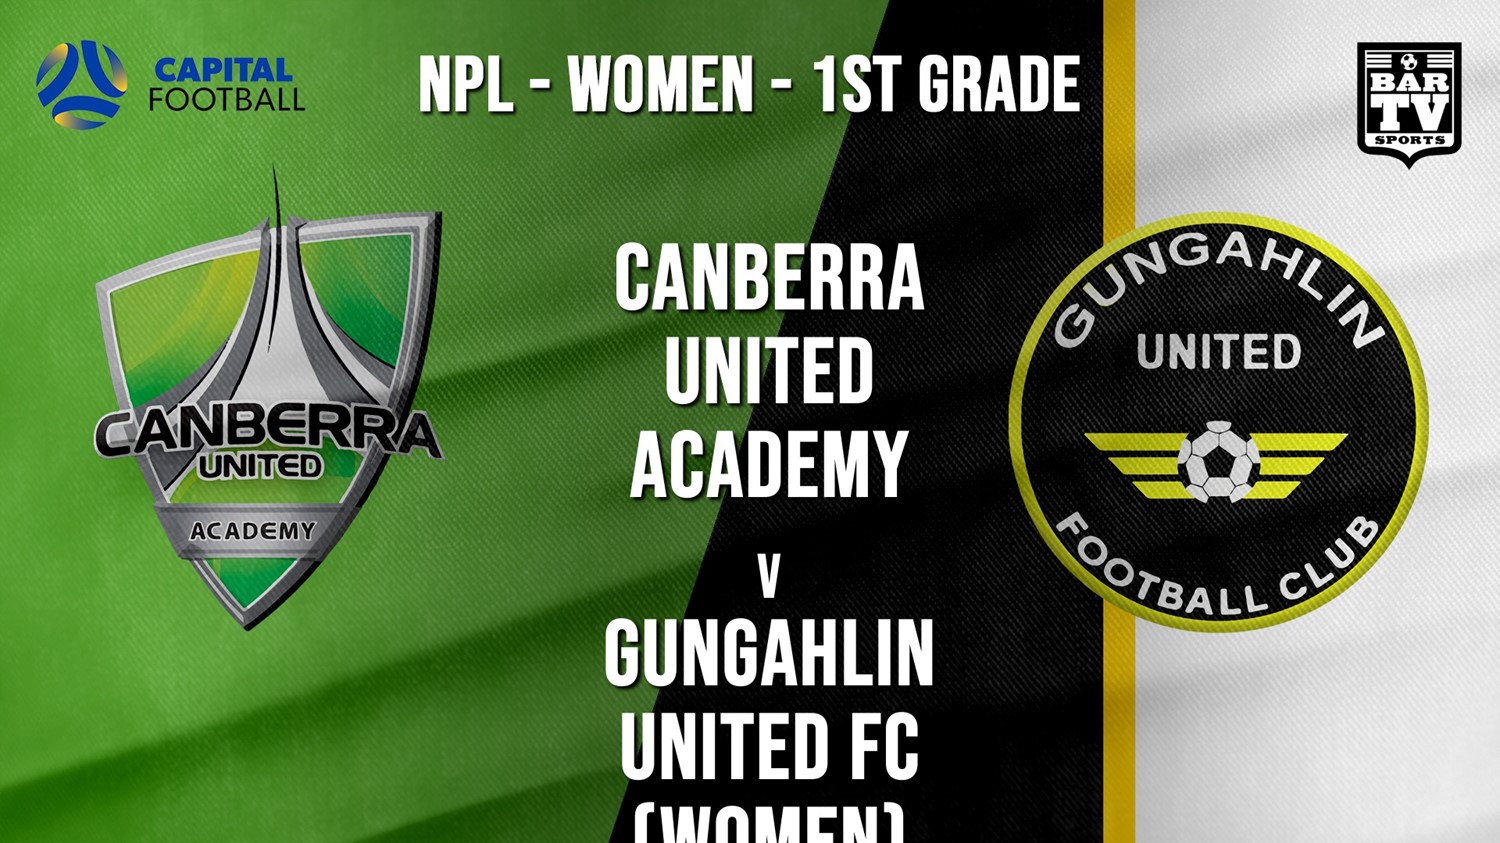 NPLW - Capital Canberra United Academy v Gungahlin United FC (women) Minigame Slate Image